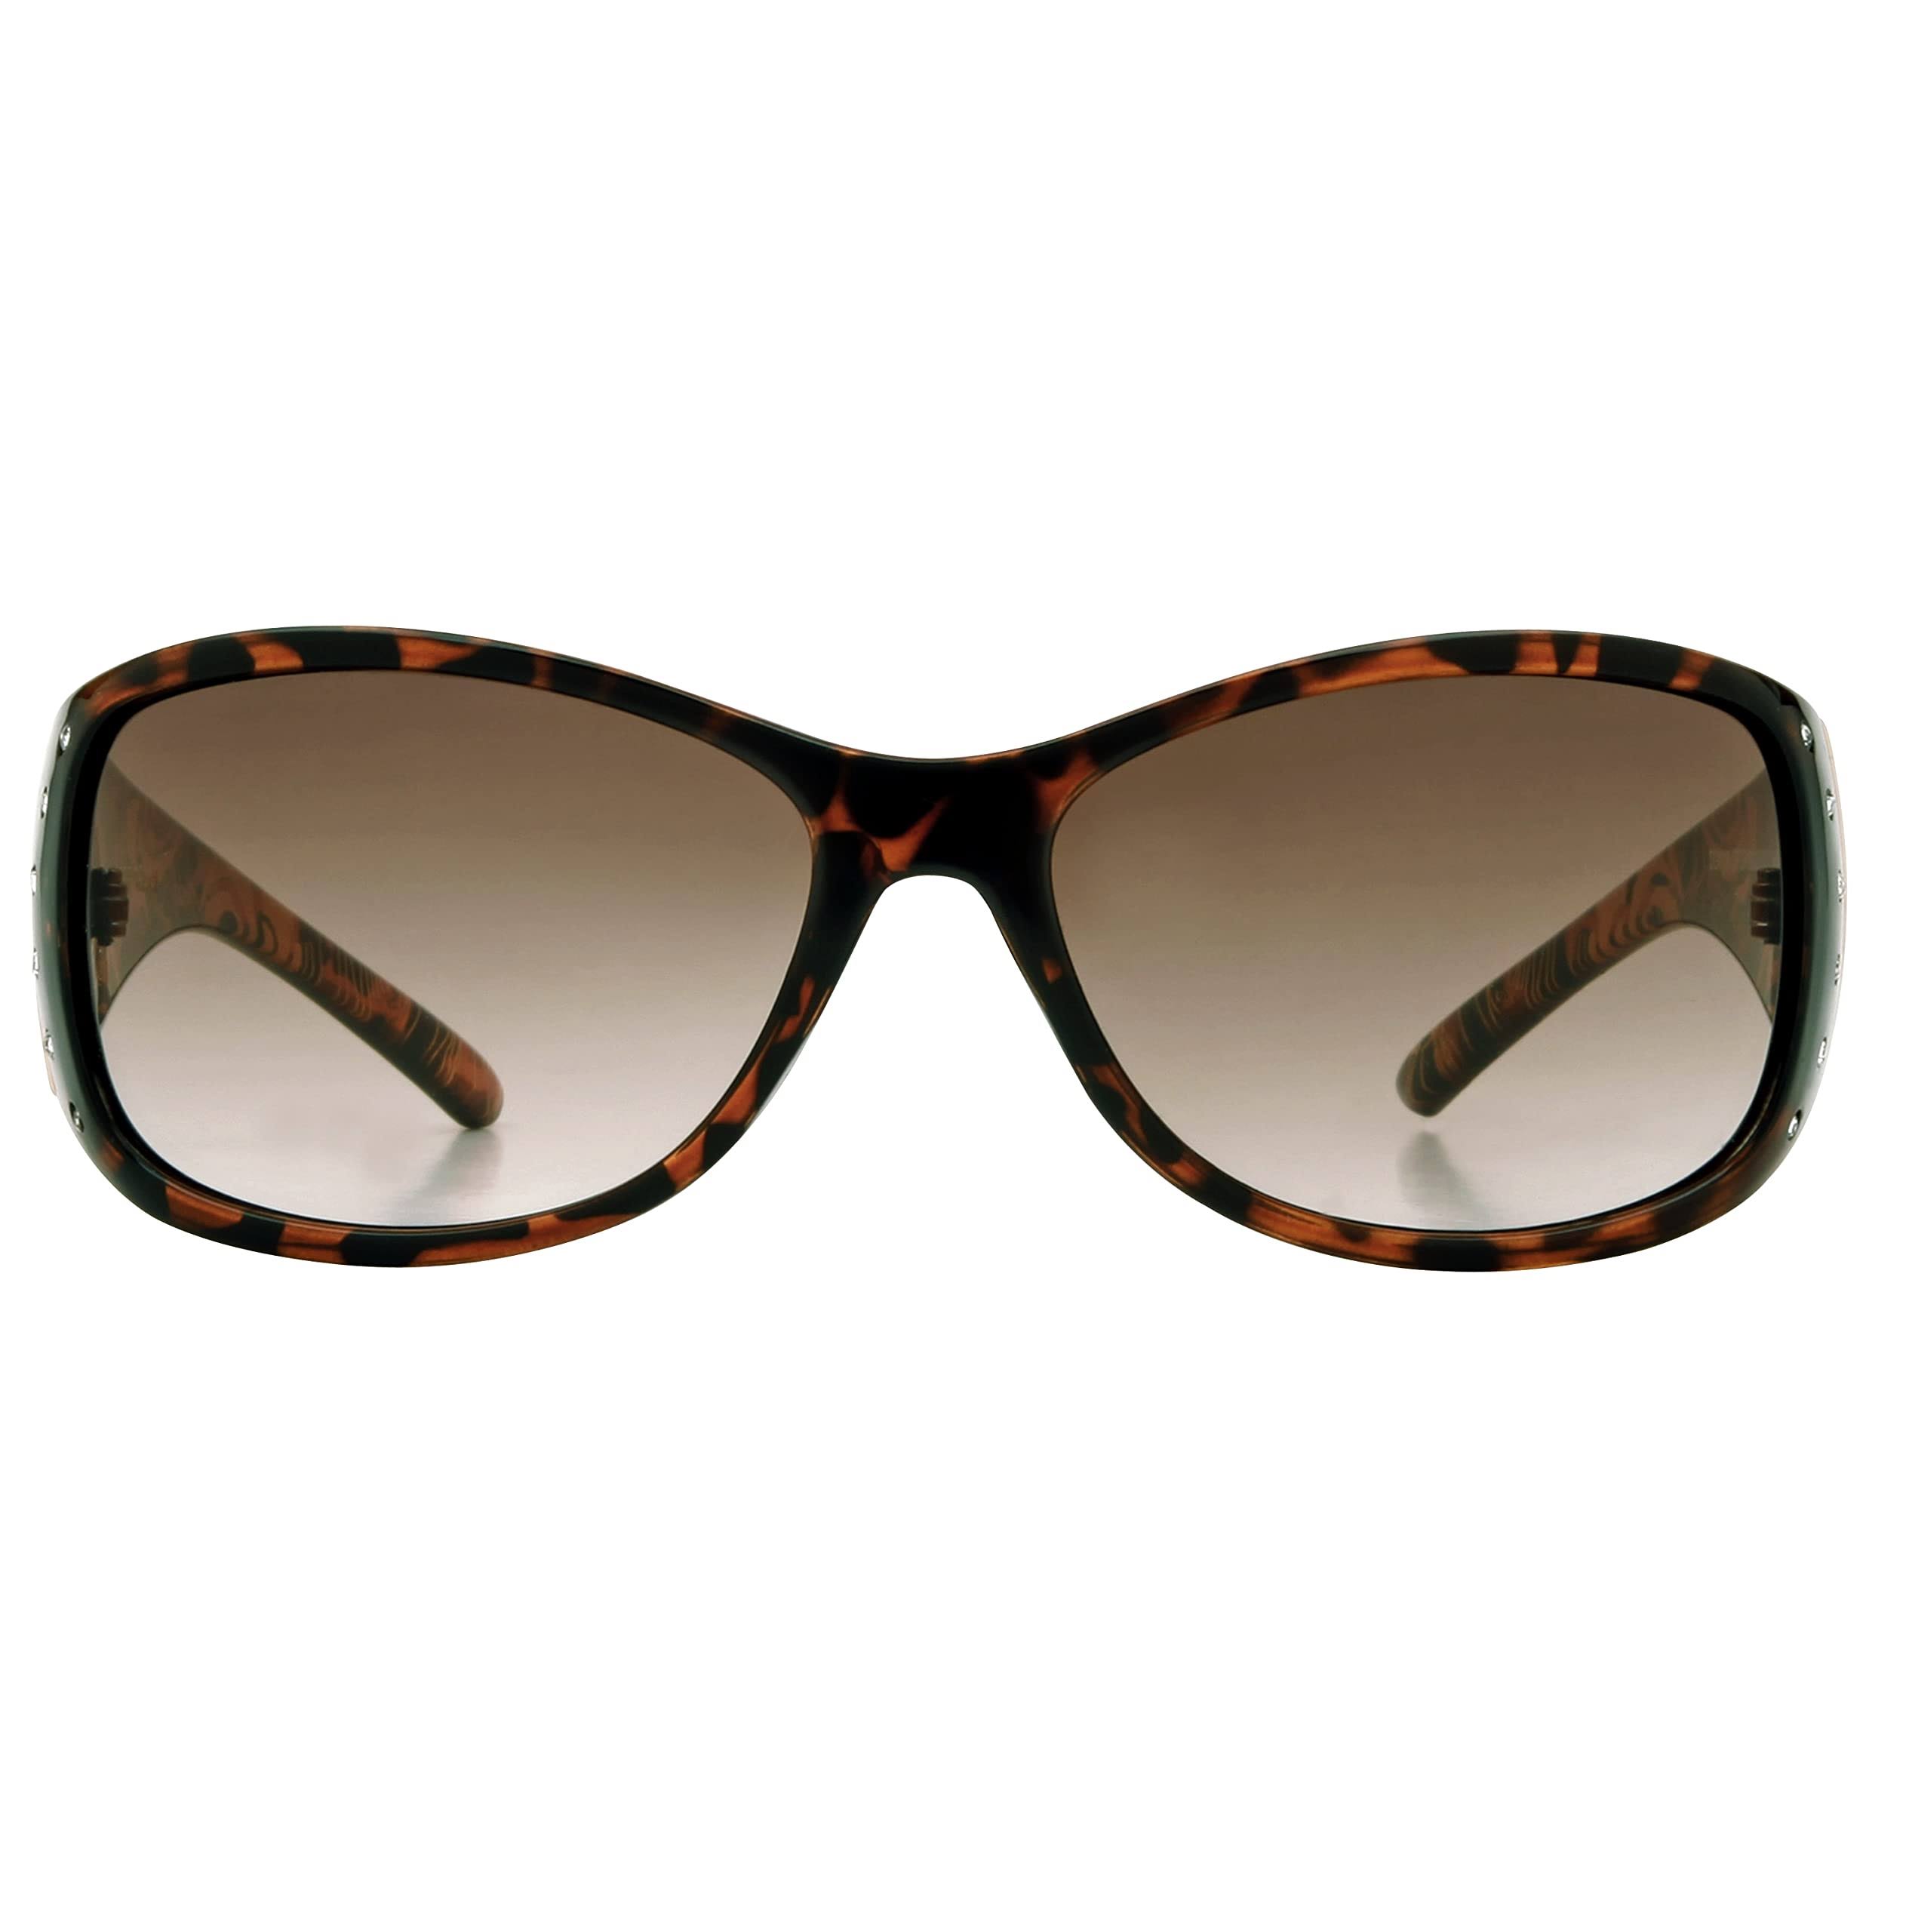 Foster Grant Women's Mocha 2.0 Sunglasses, Tortoiseshell, One Size